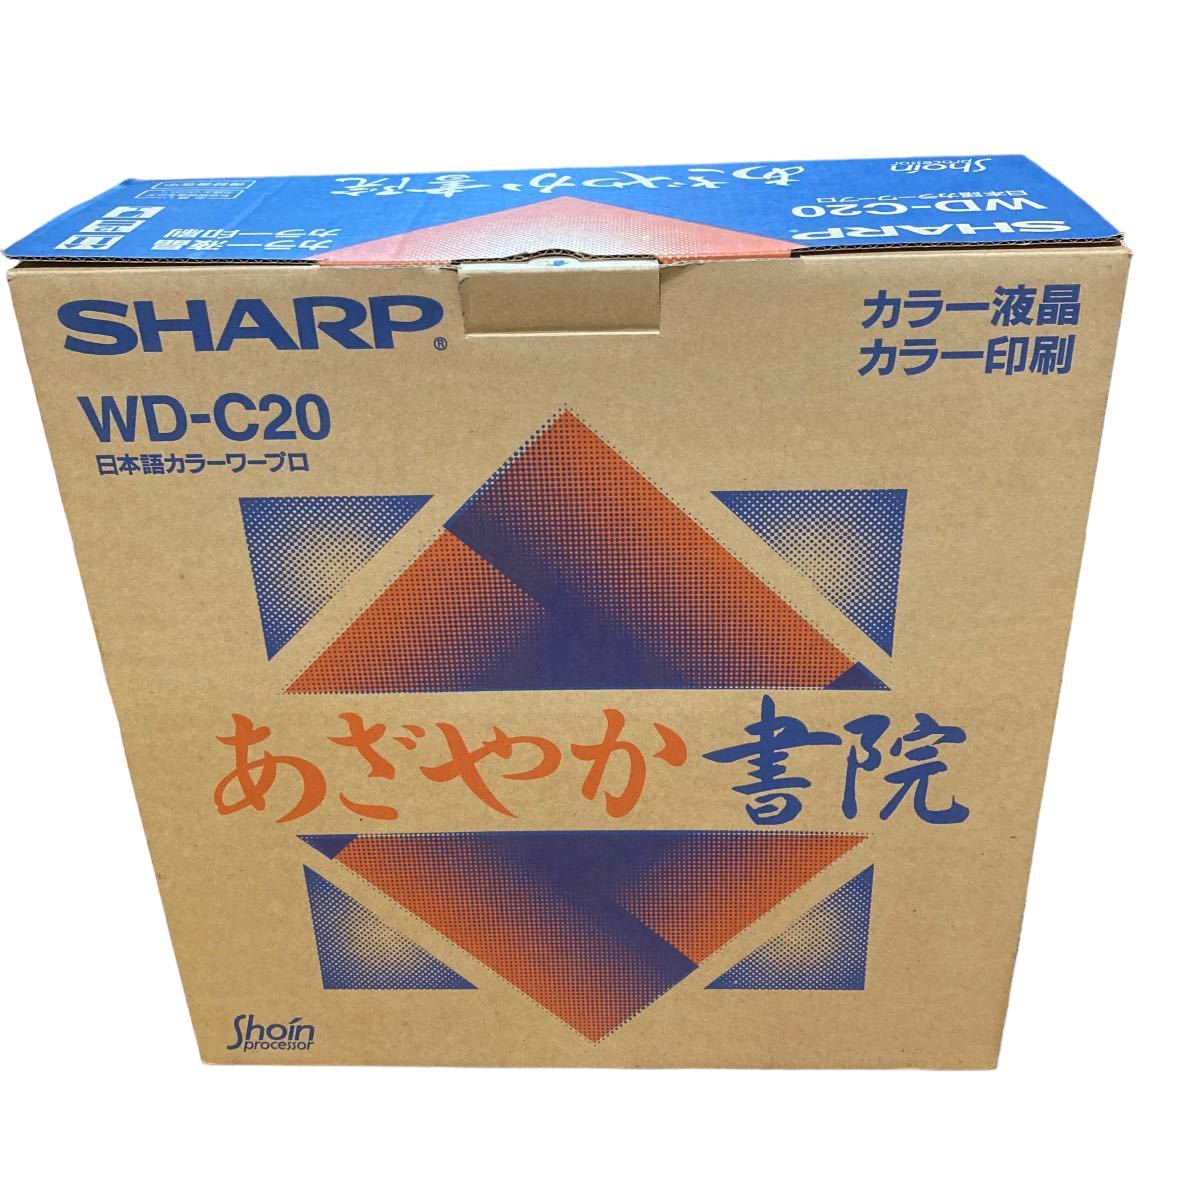 ☆SHARP製ワープロ 書院 ☆WD-C20☆ 箱 取説 付き(ワープロ専用機